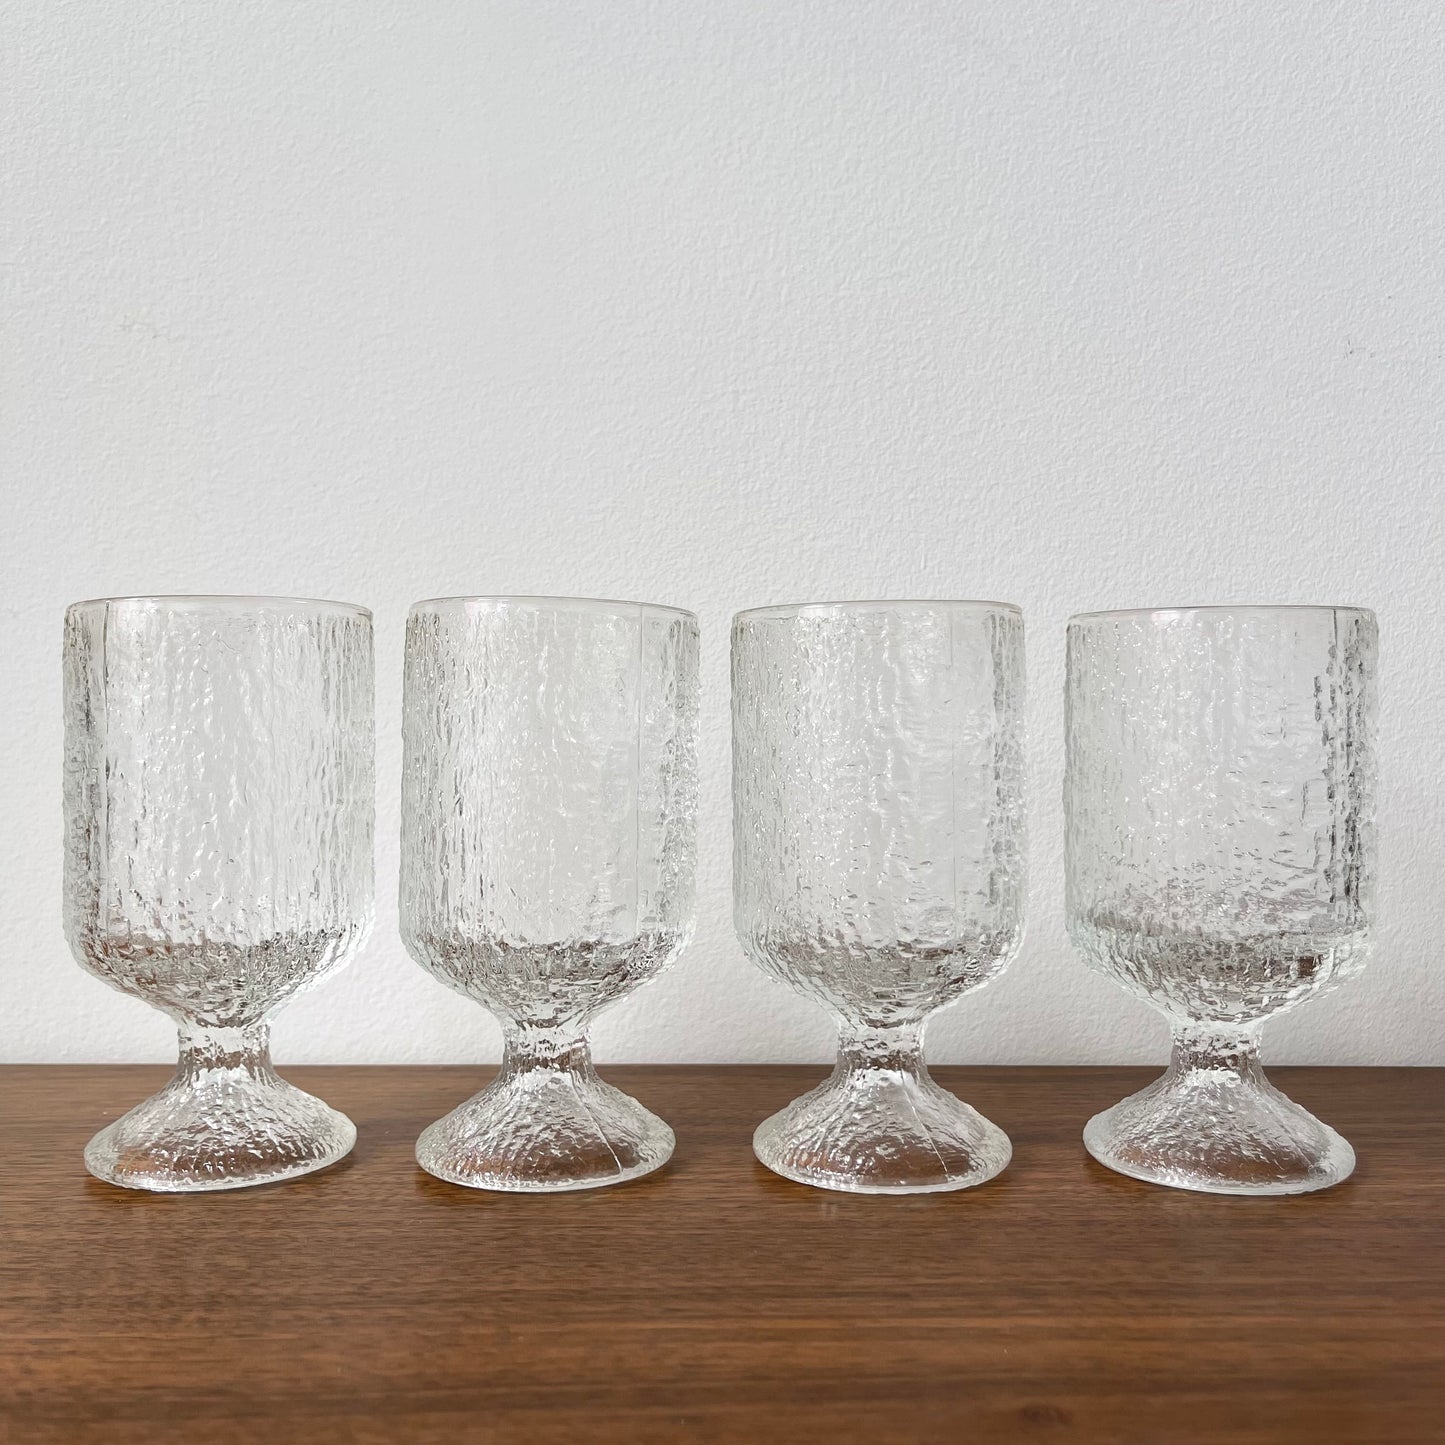 Set of 4 Vintage Textured Glasses 5.25”